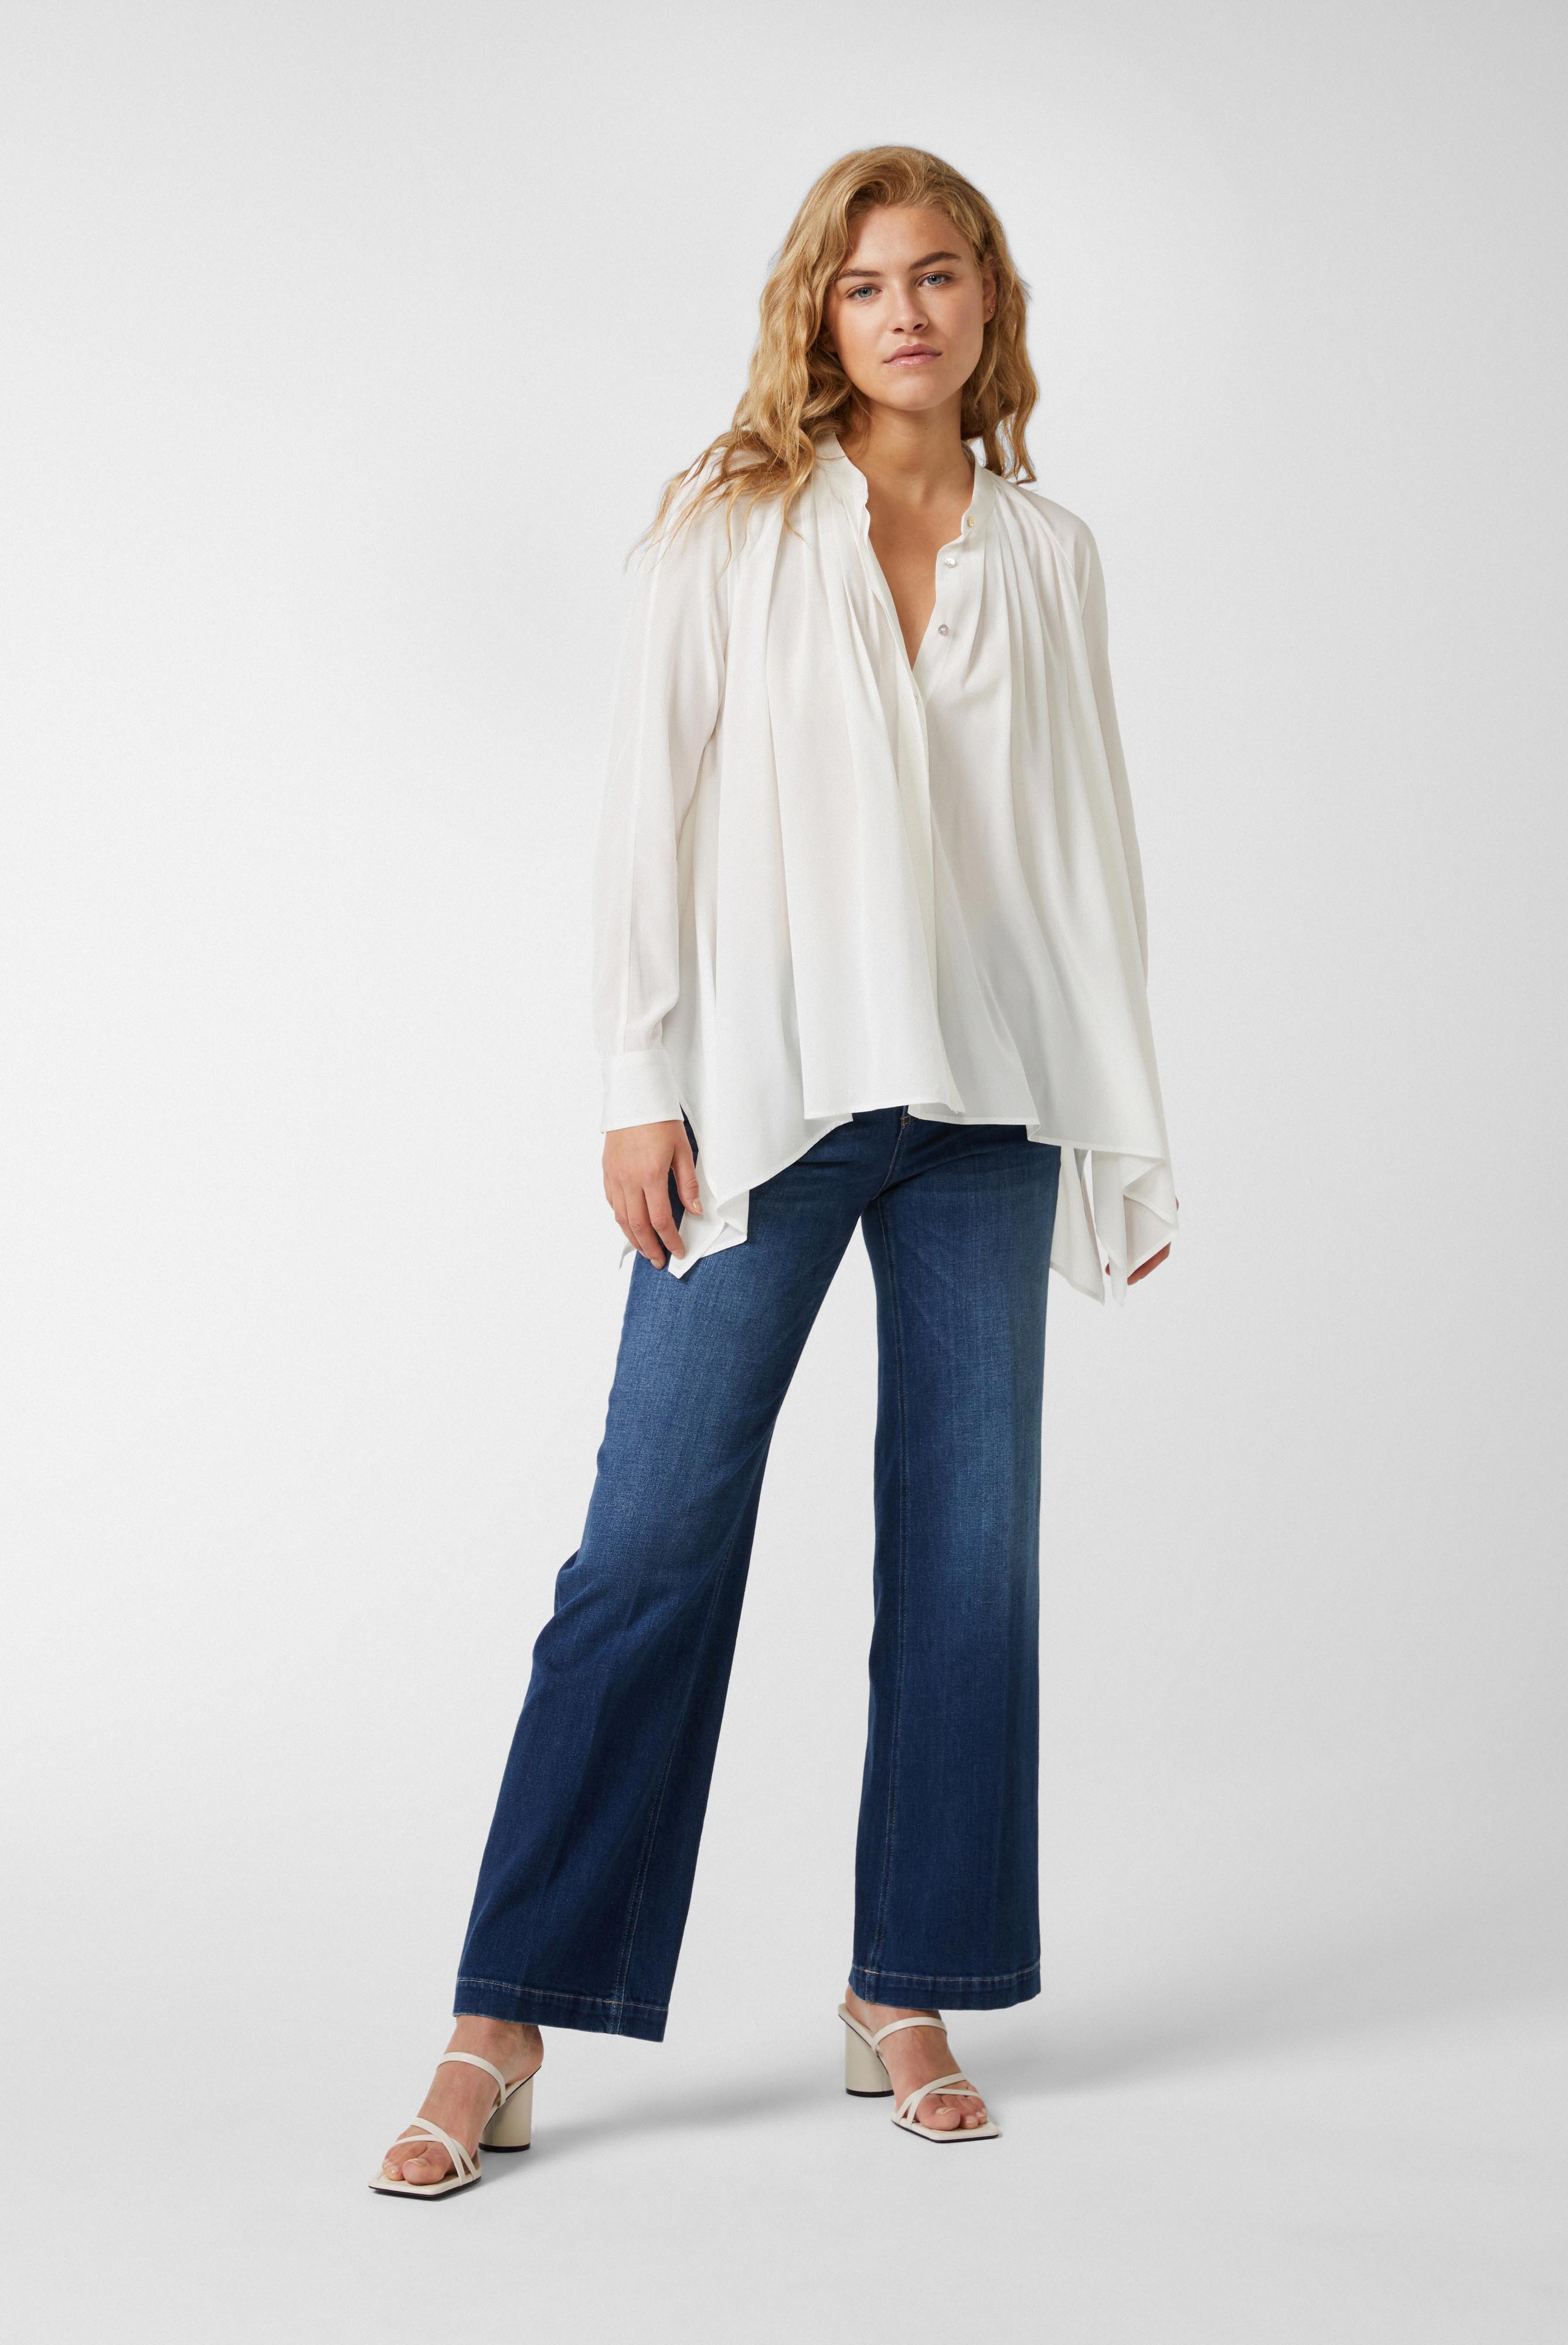 Meisterwerk Blouses+Crepe blouse with asymmetric hem white+05.525P.07.155553.105.44